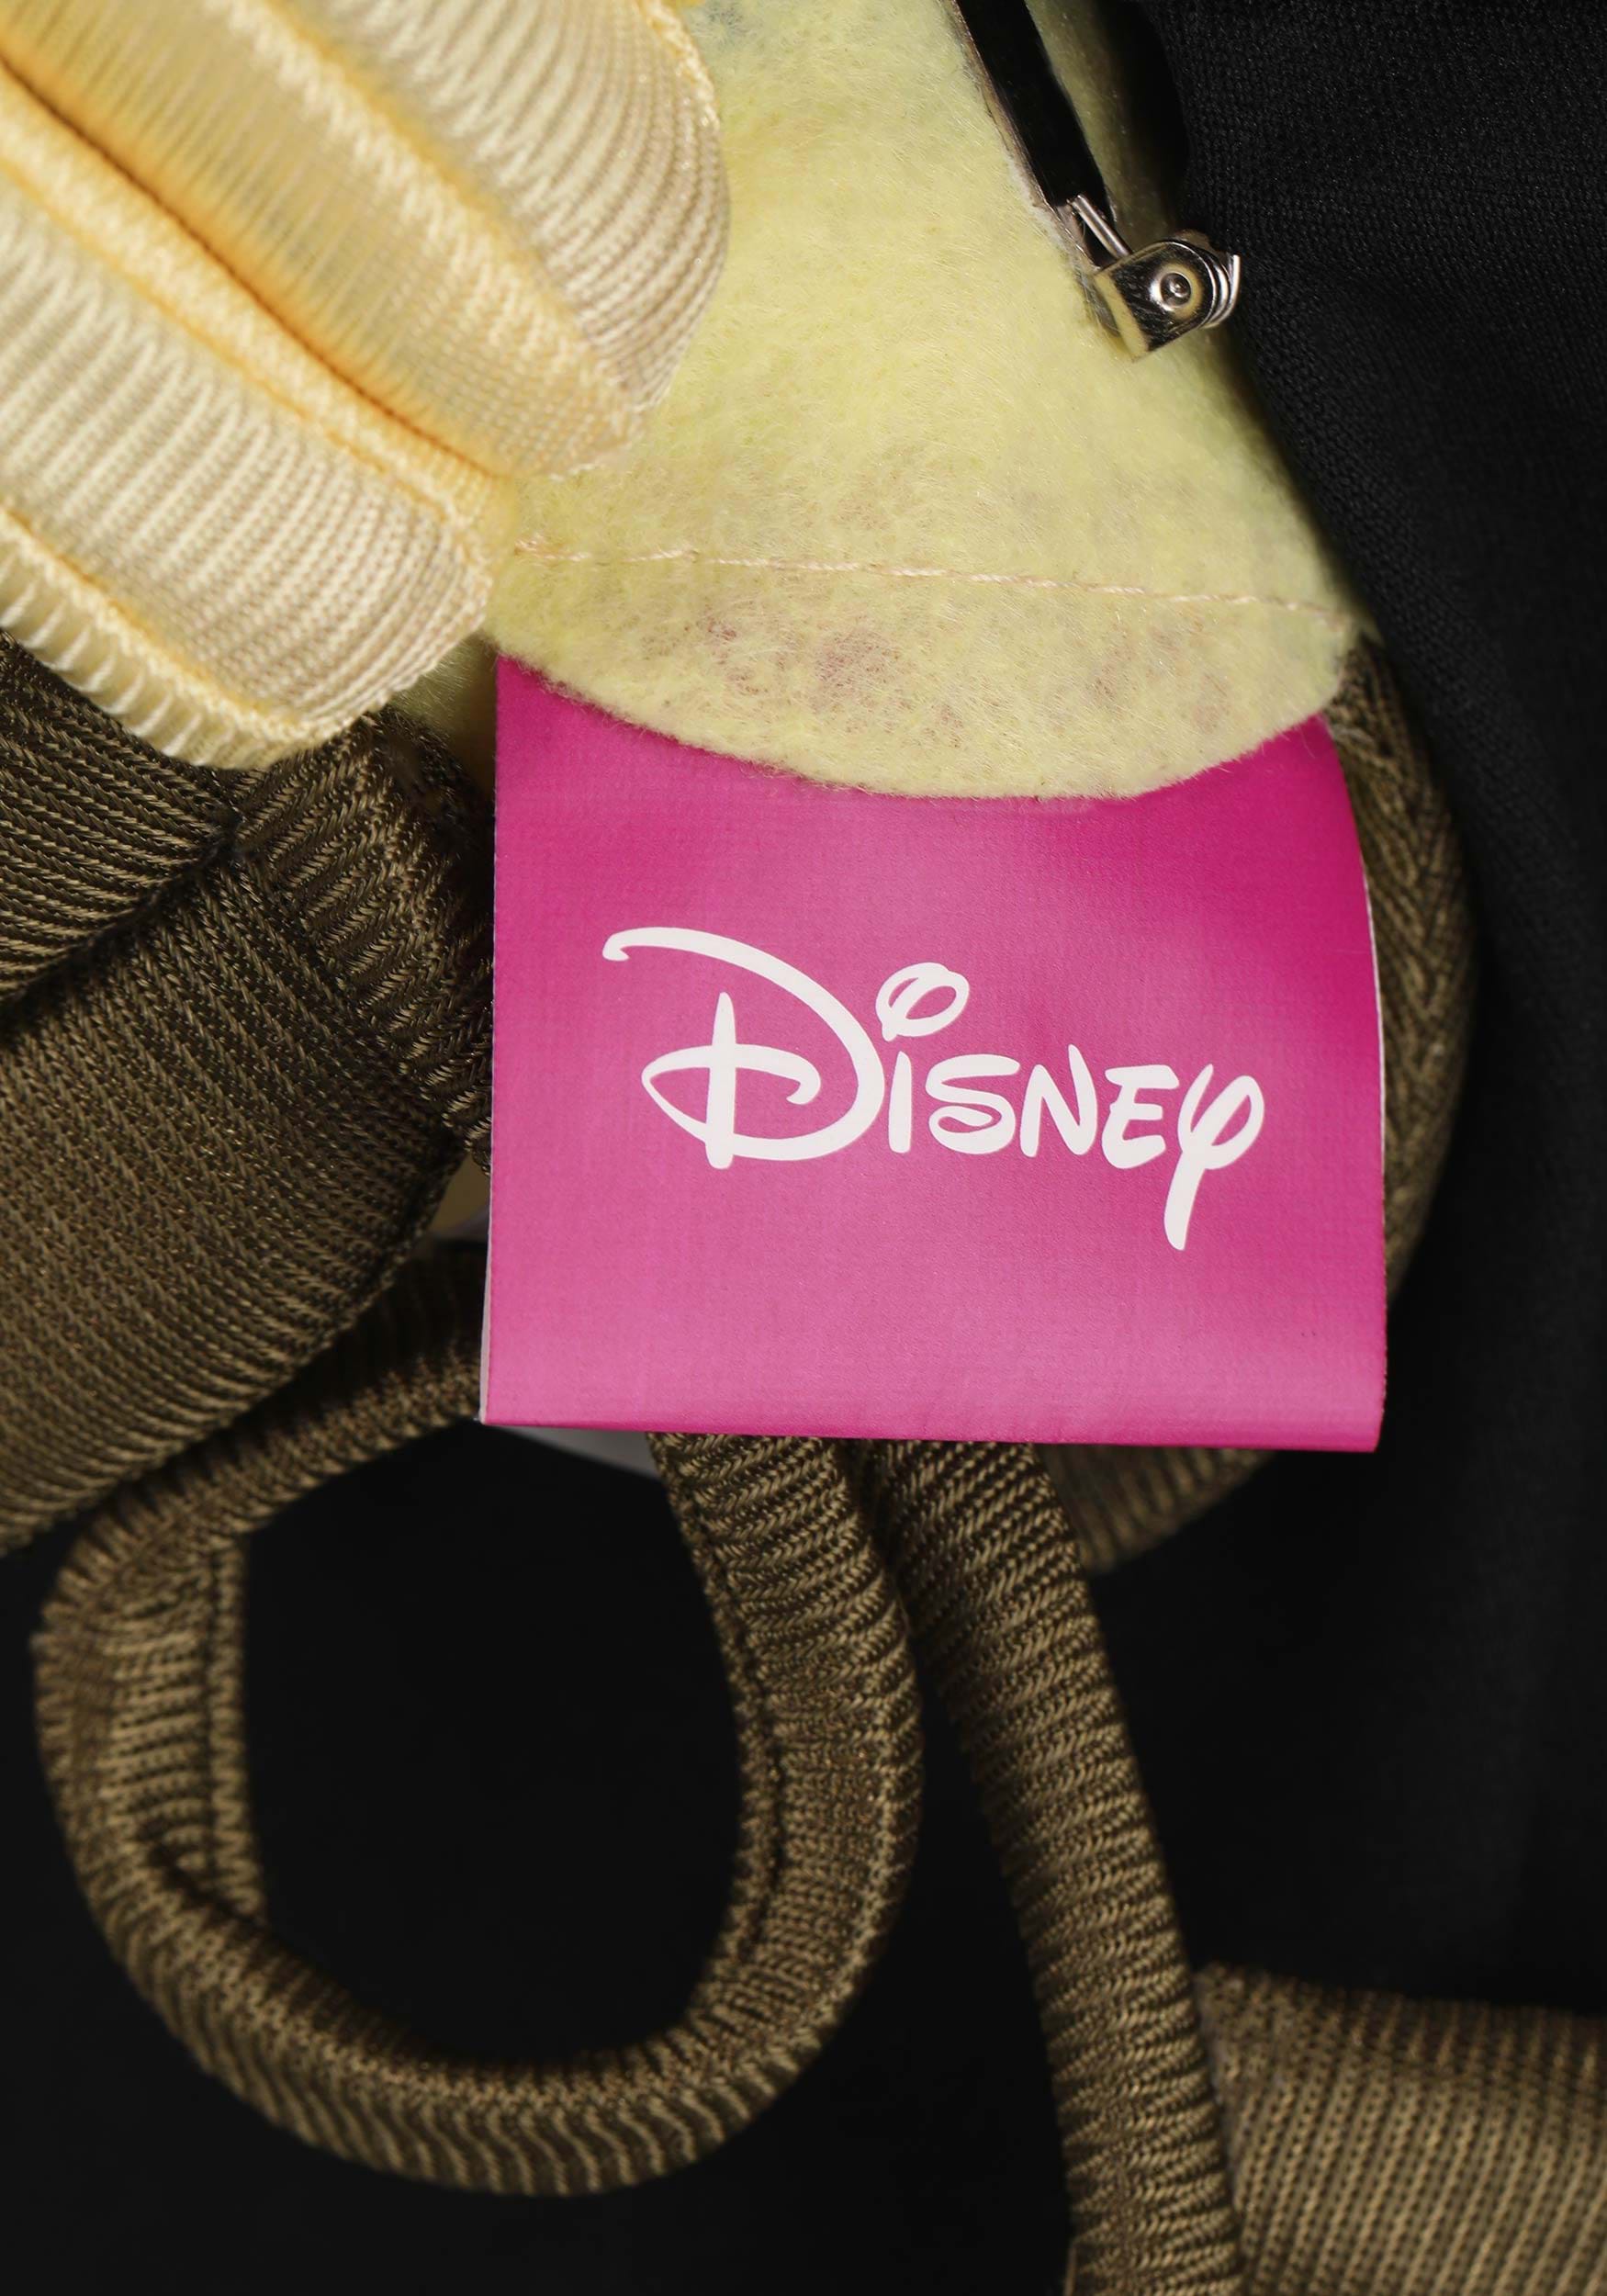 Women's Disney Tiana Princess Costume Kit